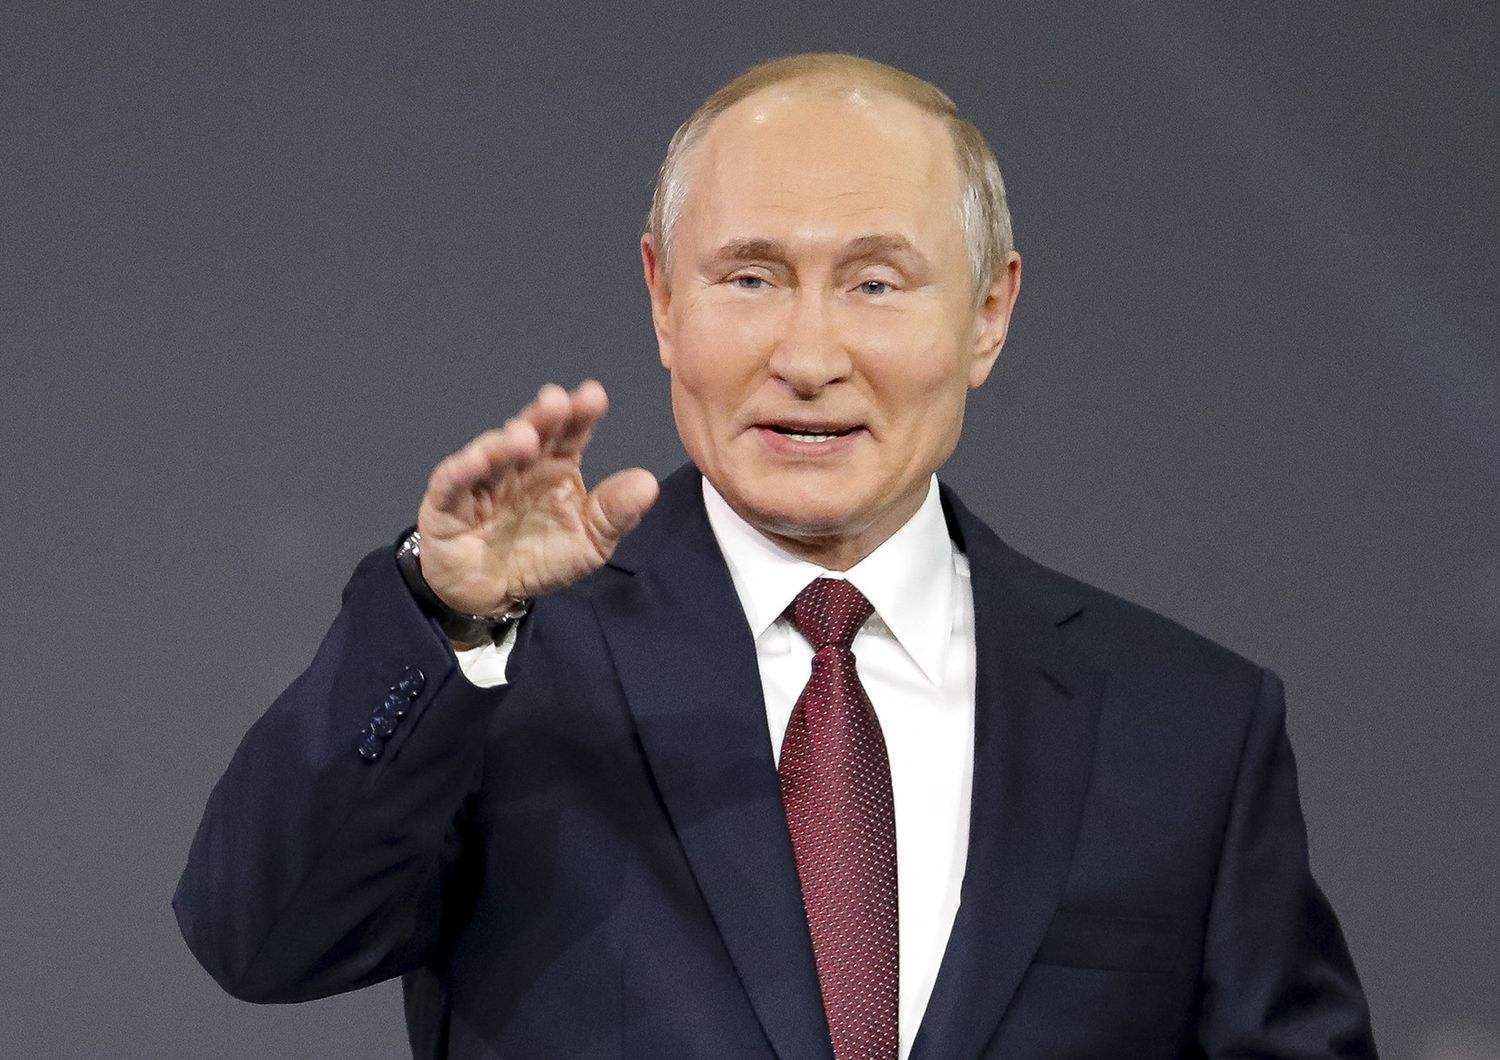 Il presidente russo, Vladimir Putin